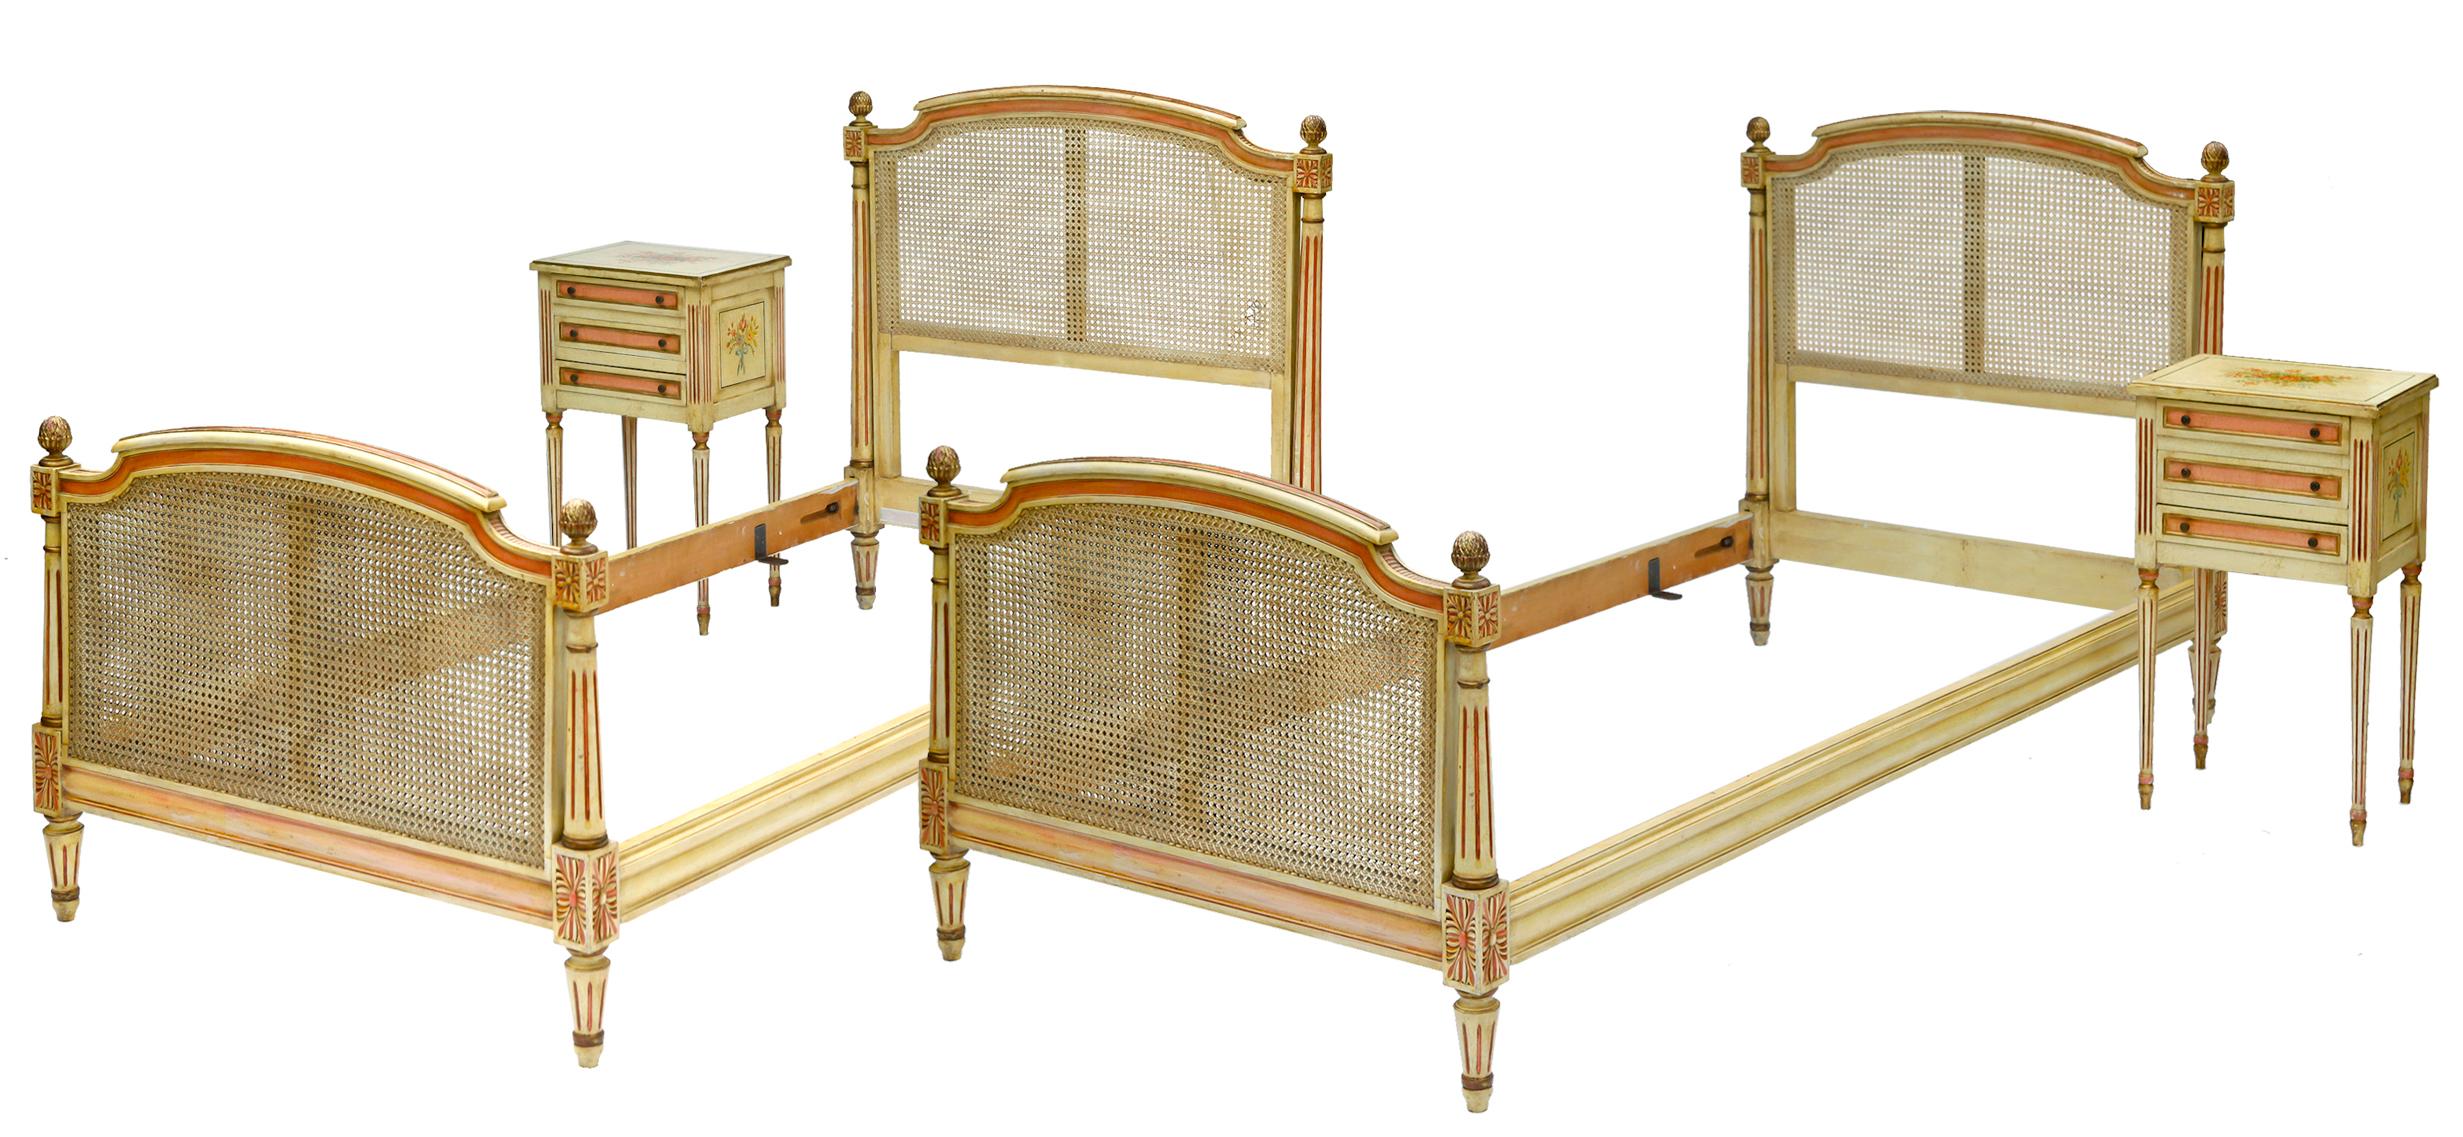 Designer French Provincial Beds & Commodes; 4 piece set